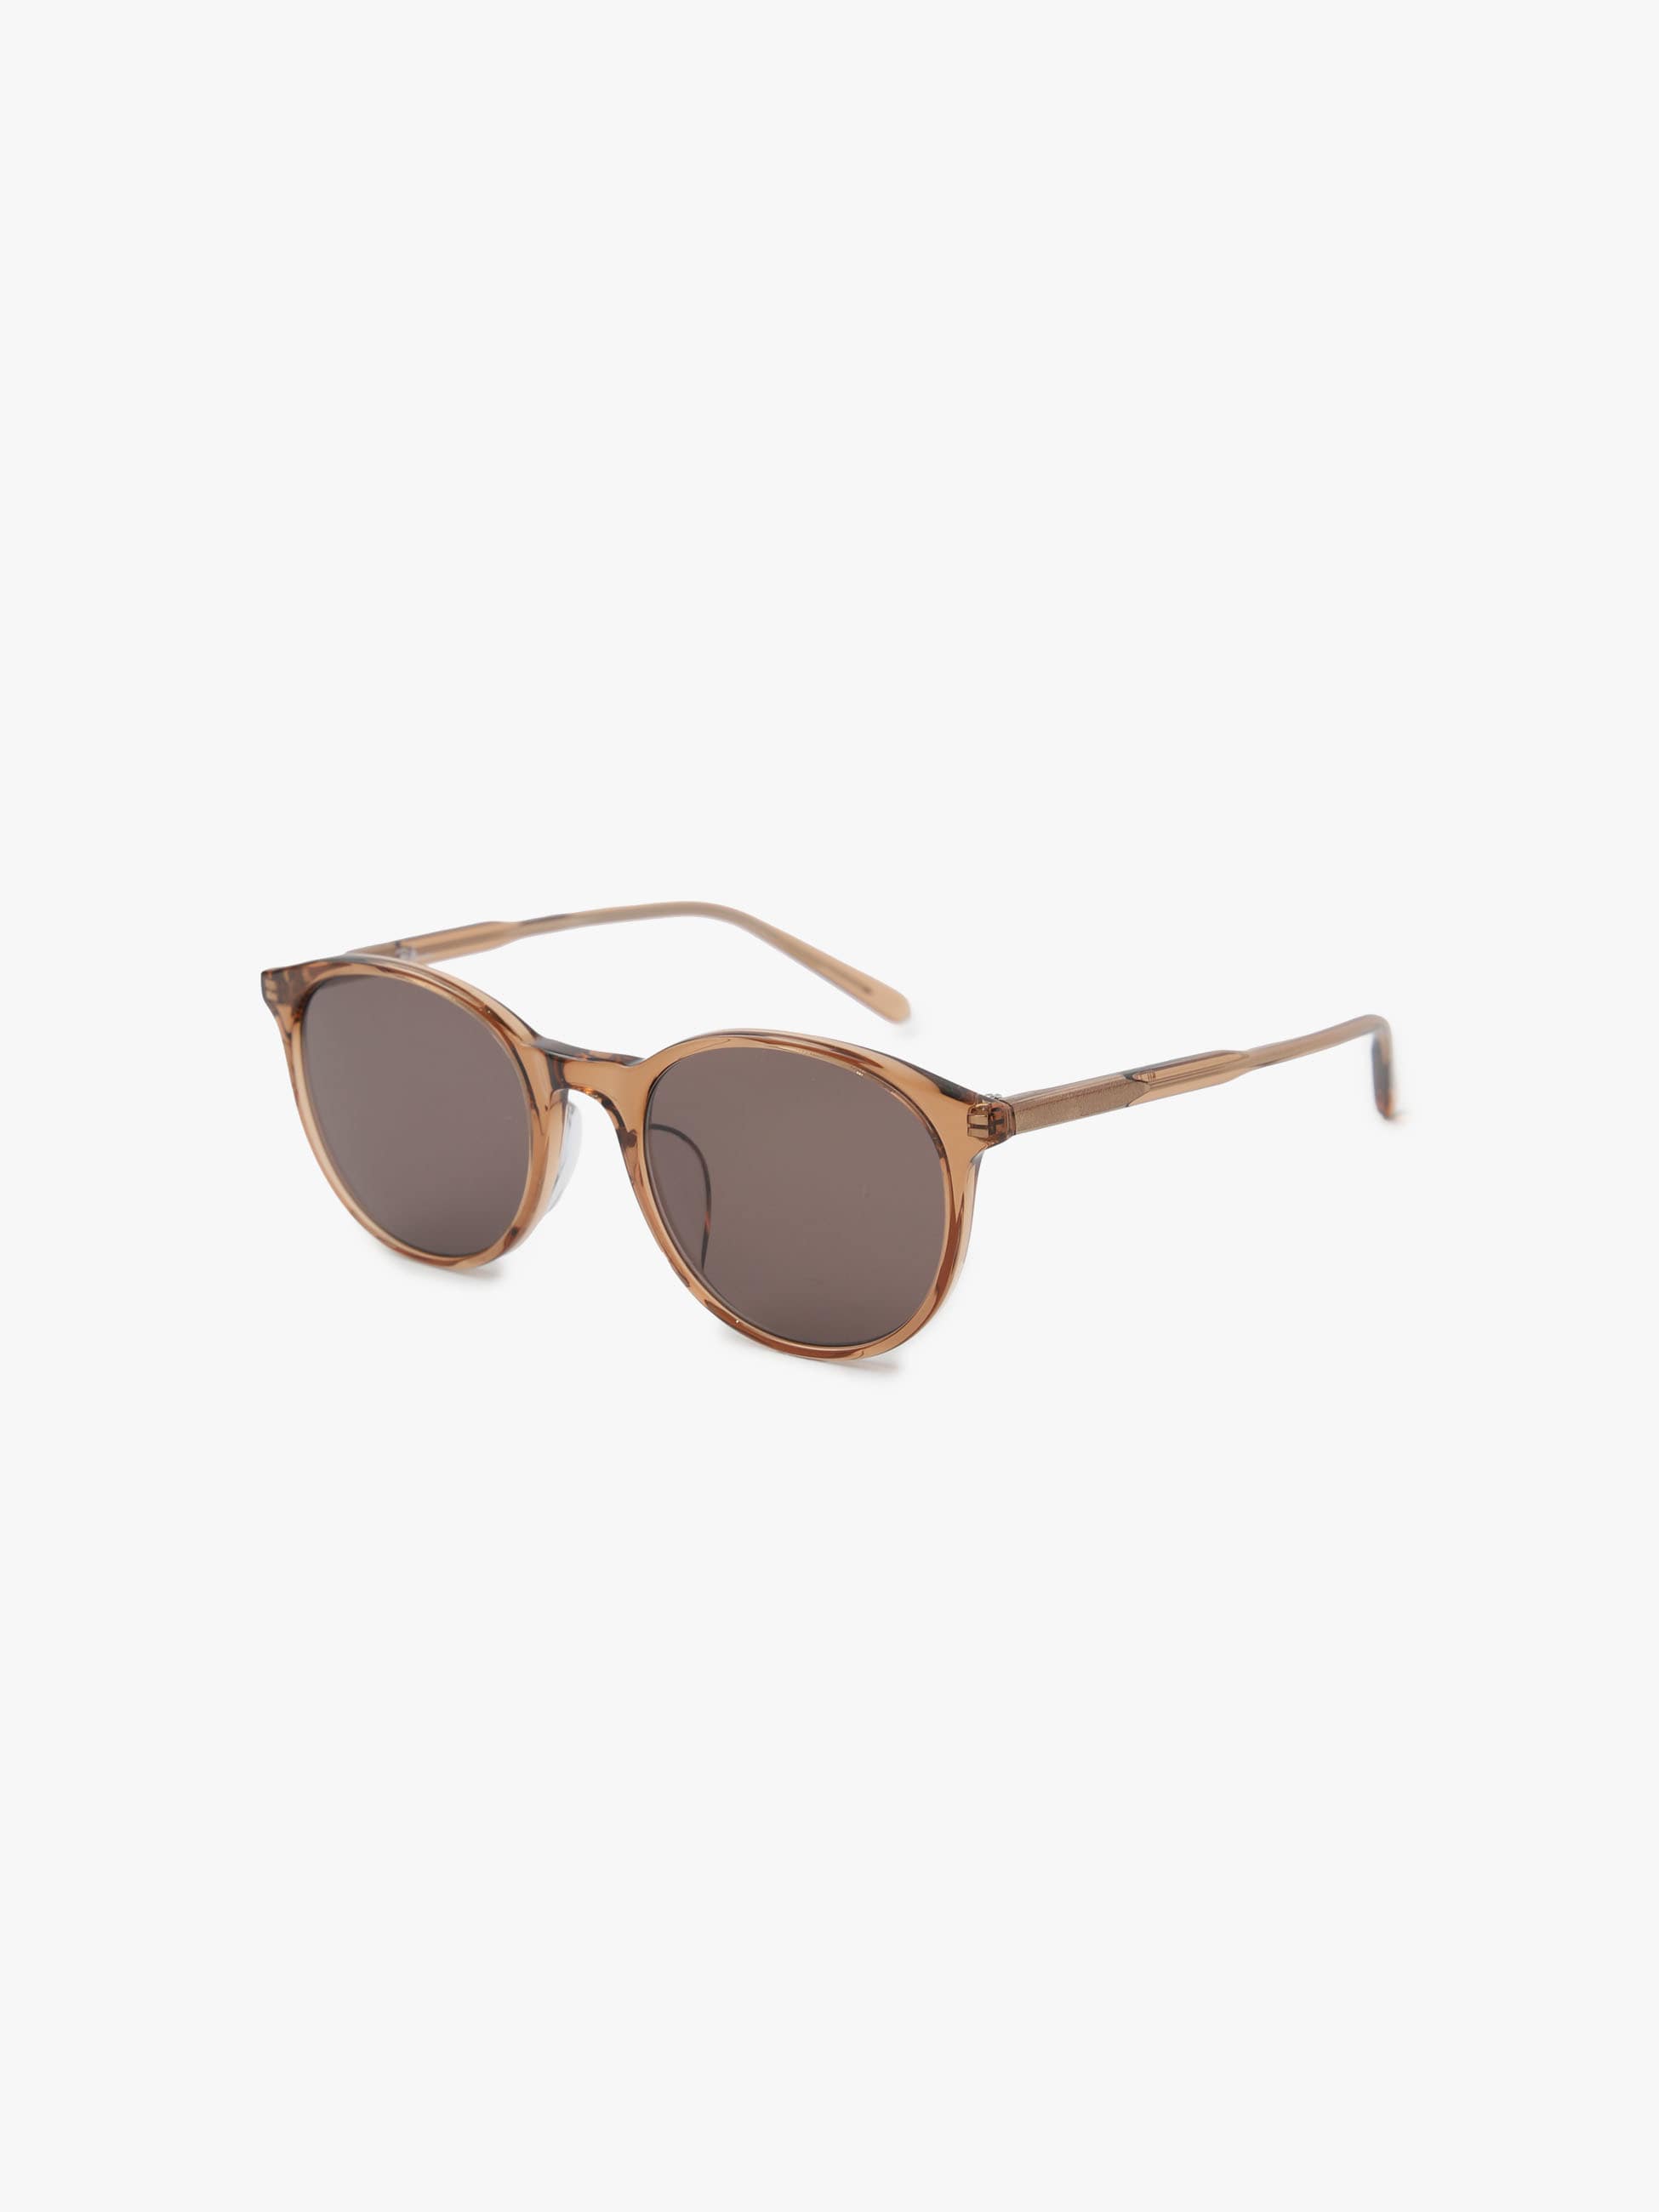 New Boston Sunglasses (Light Brown)